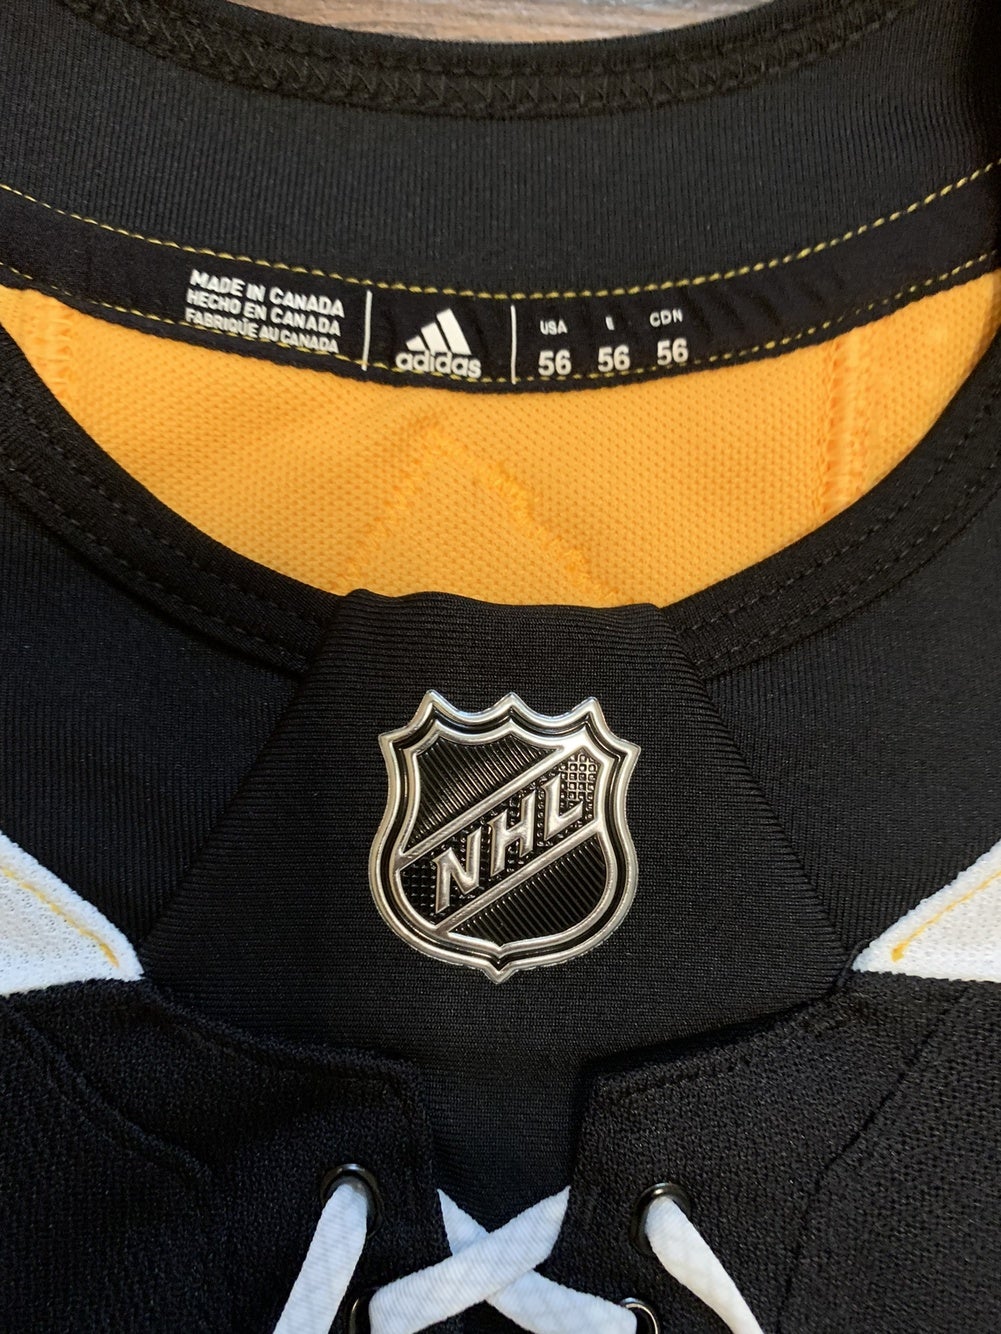 Team Issued MIC Adidas Patrice Bergeron Boston Bruins NHL Hockey Jersey  Black 56